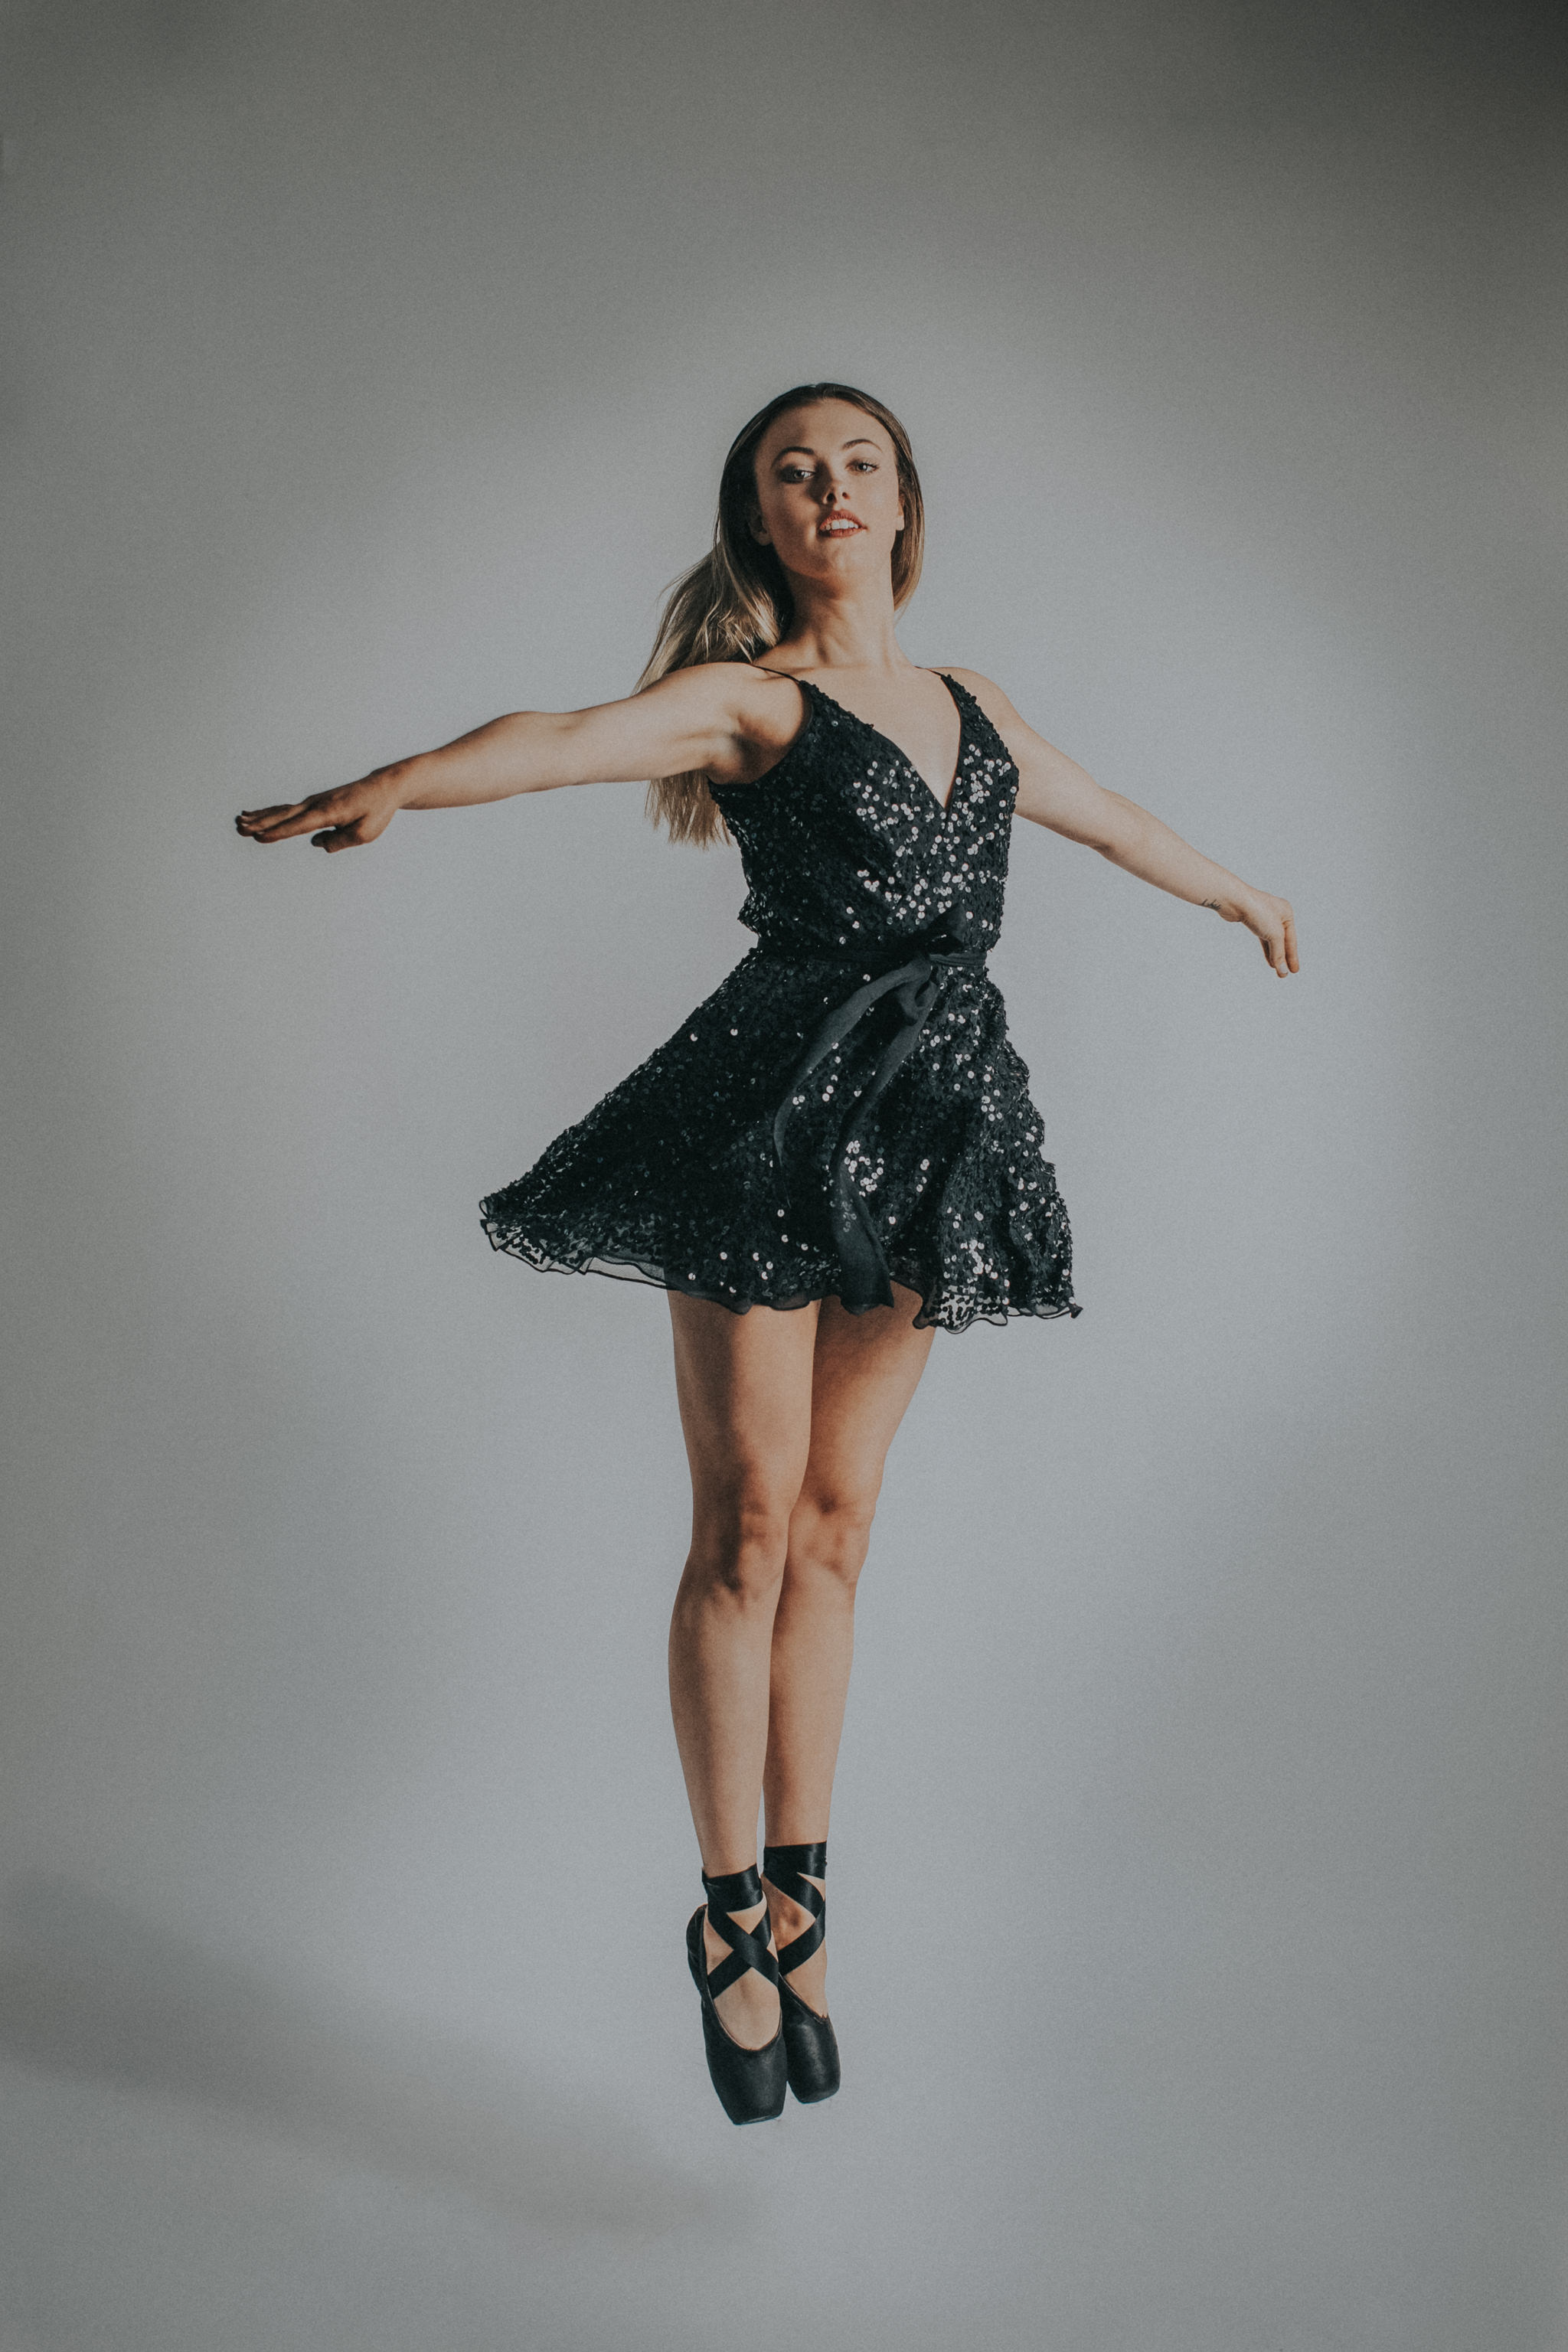 dancer jumps - black dress - ballerina outfit